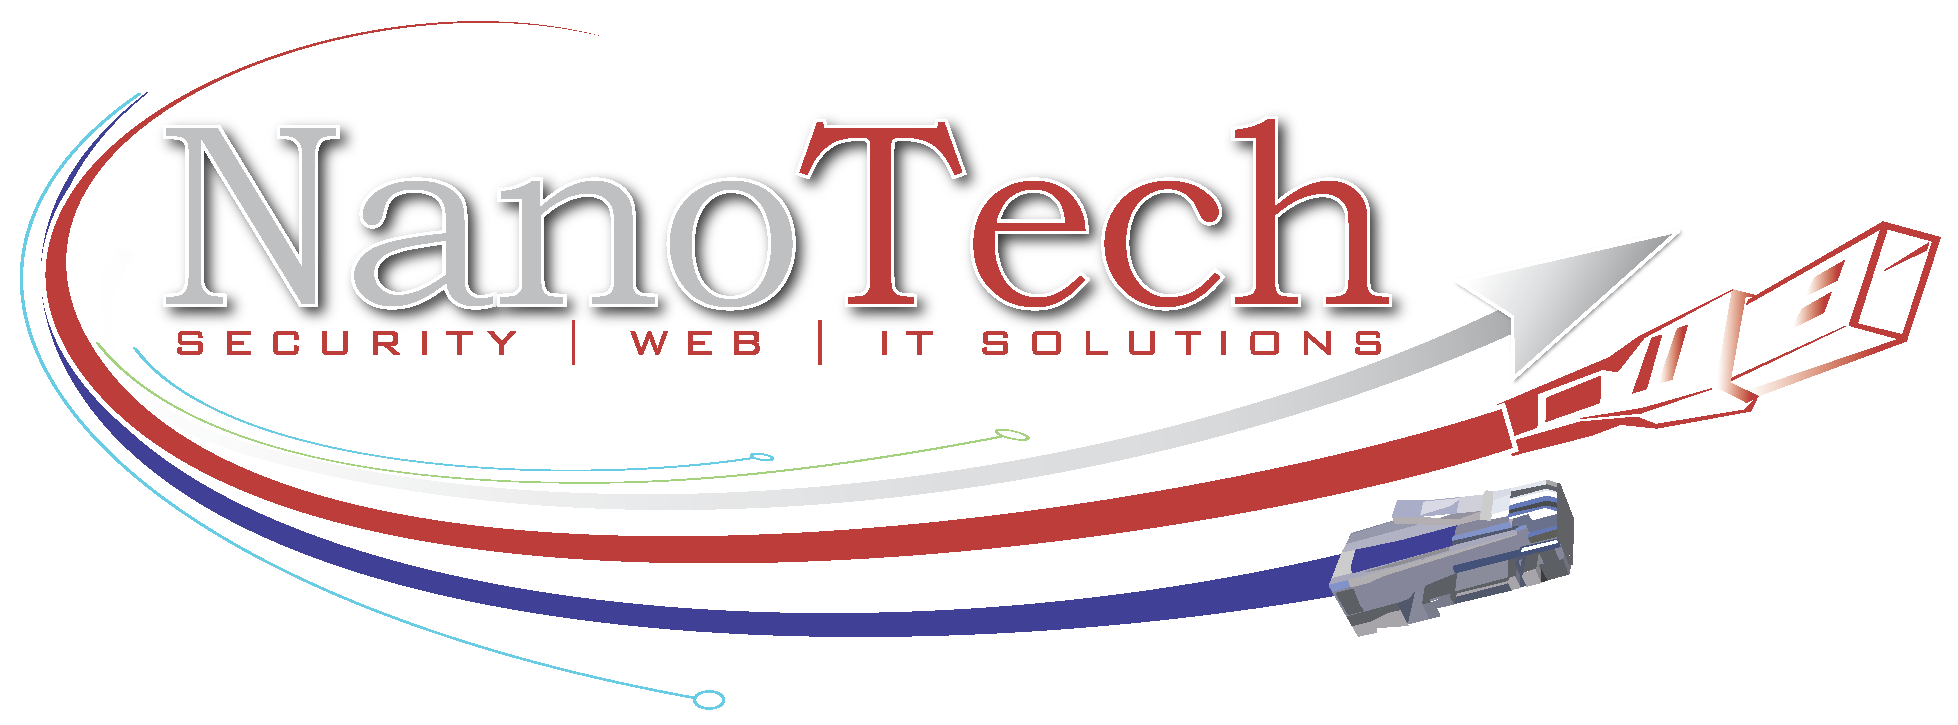 NanoTech logo